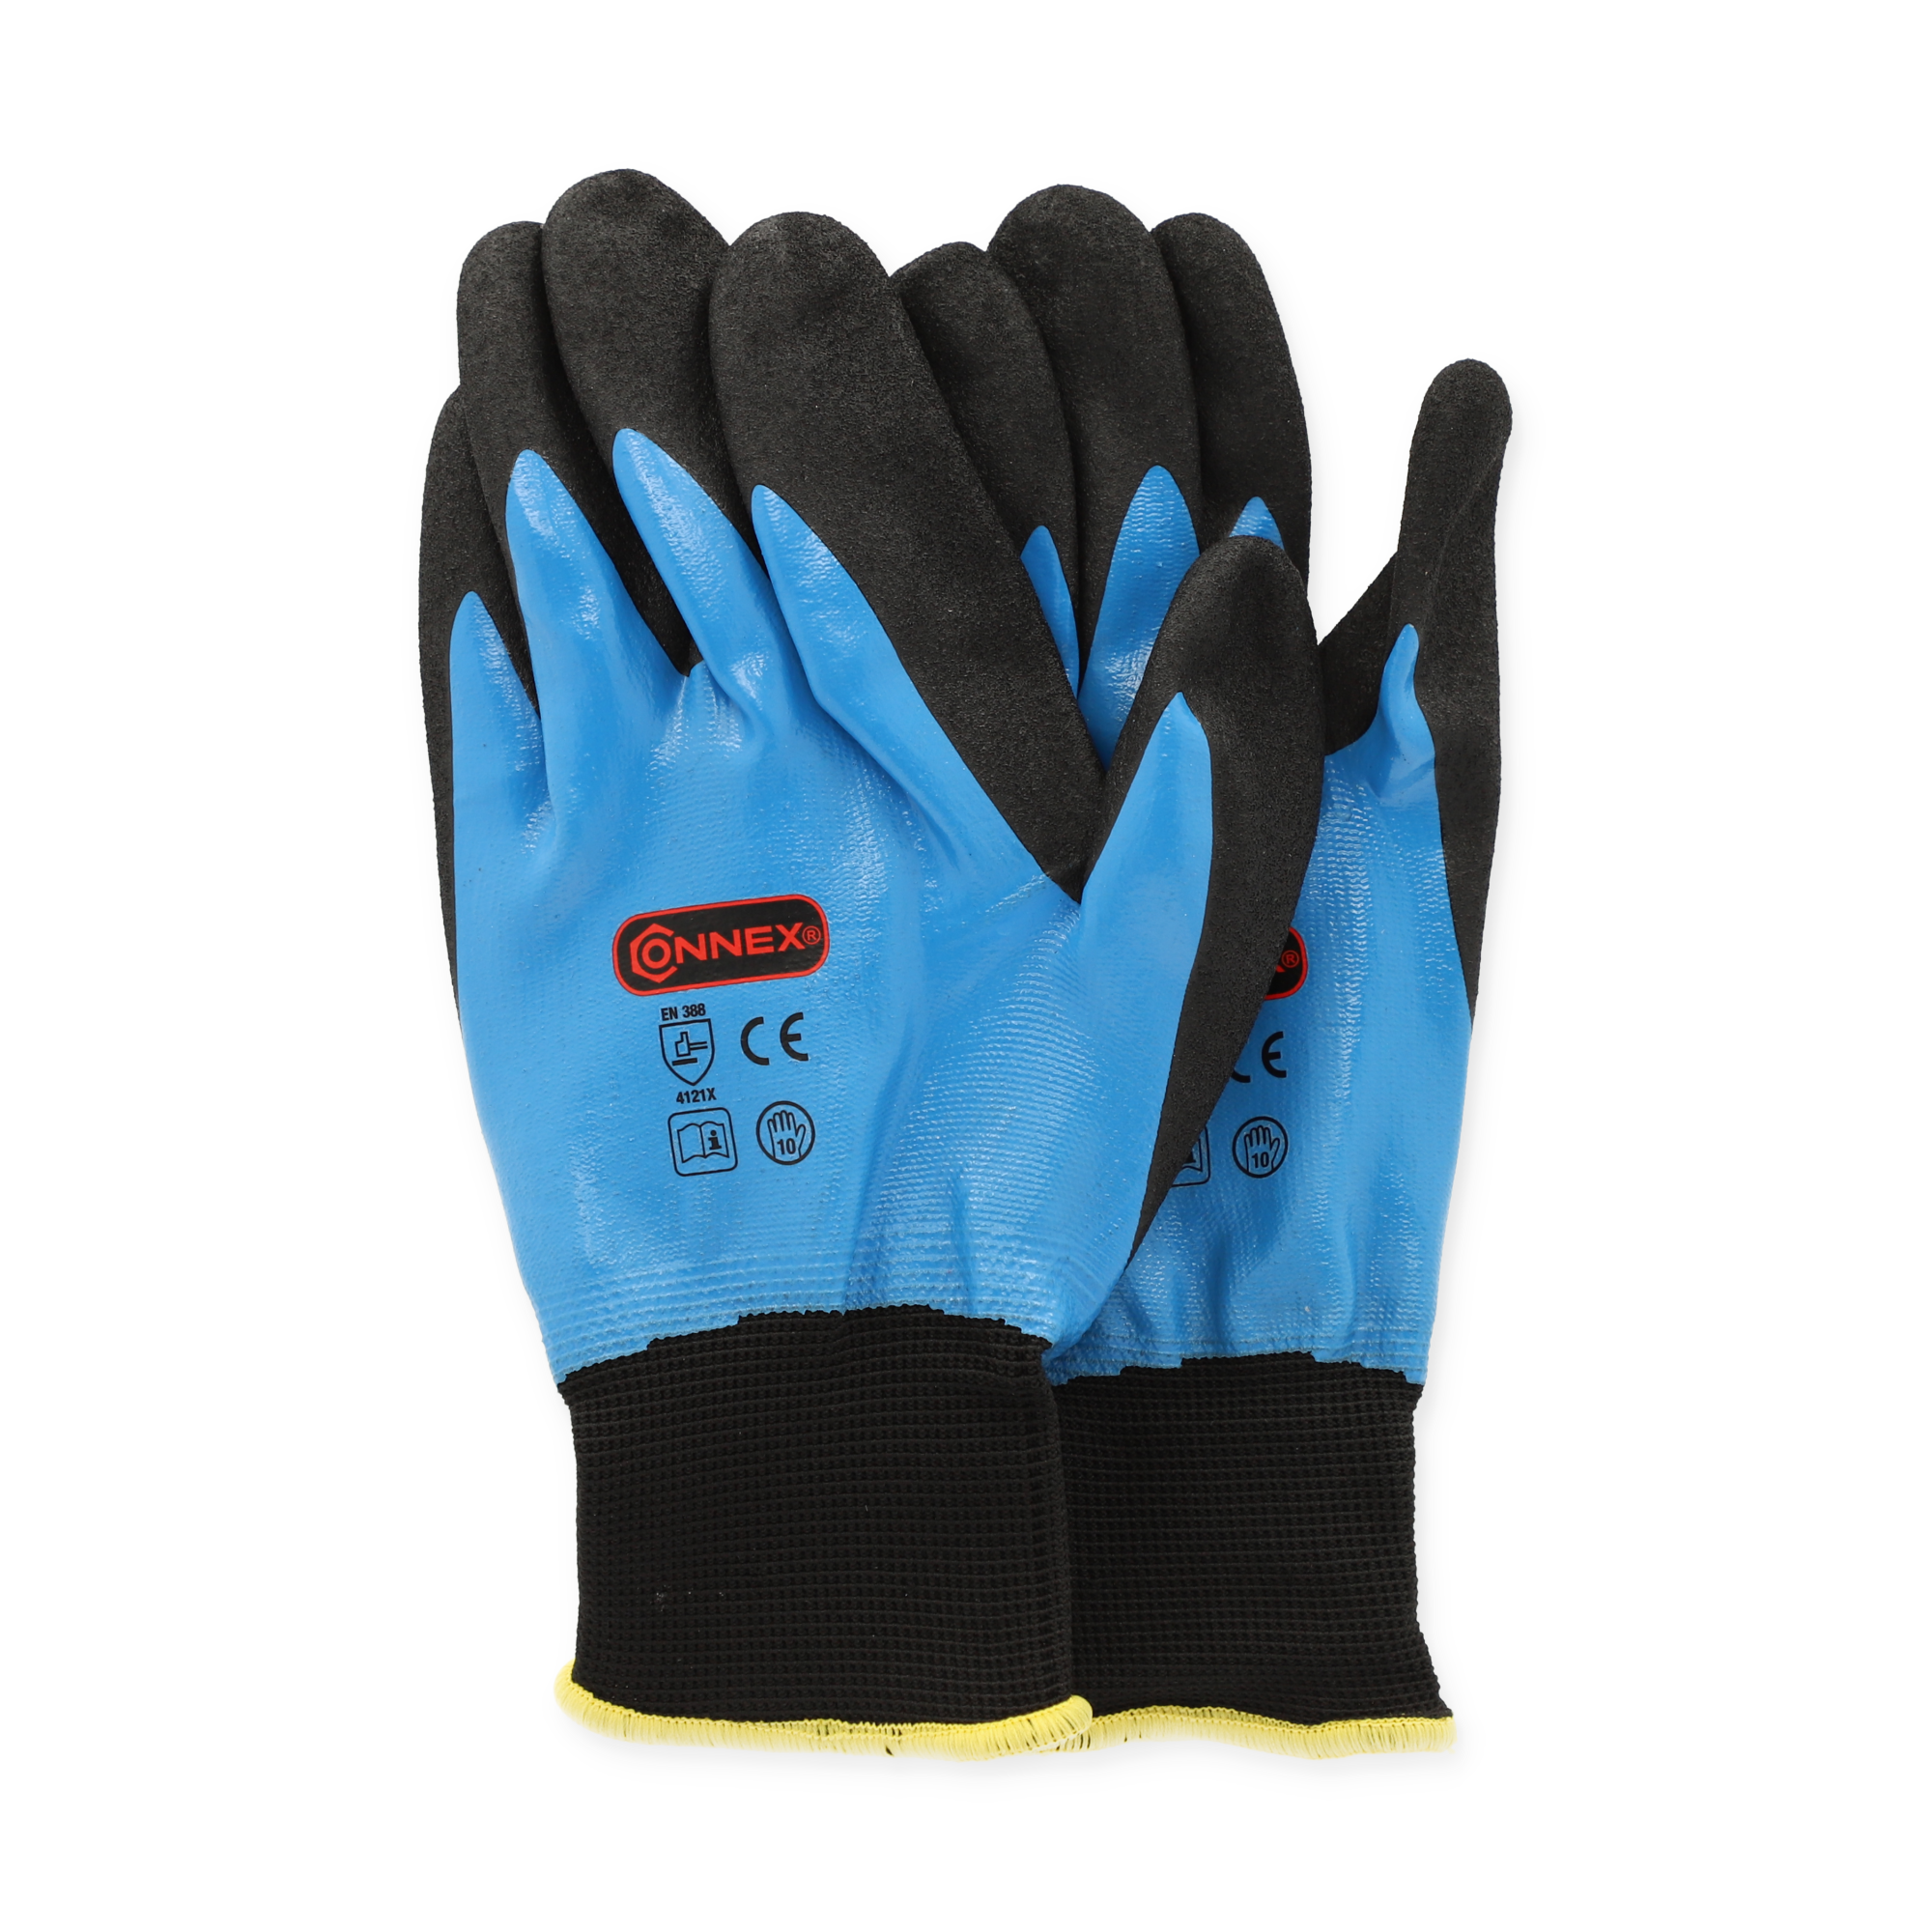 Handschuhe blau/schwarz Gr. 10 + product picture